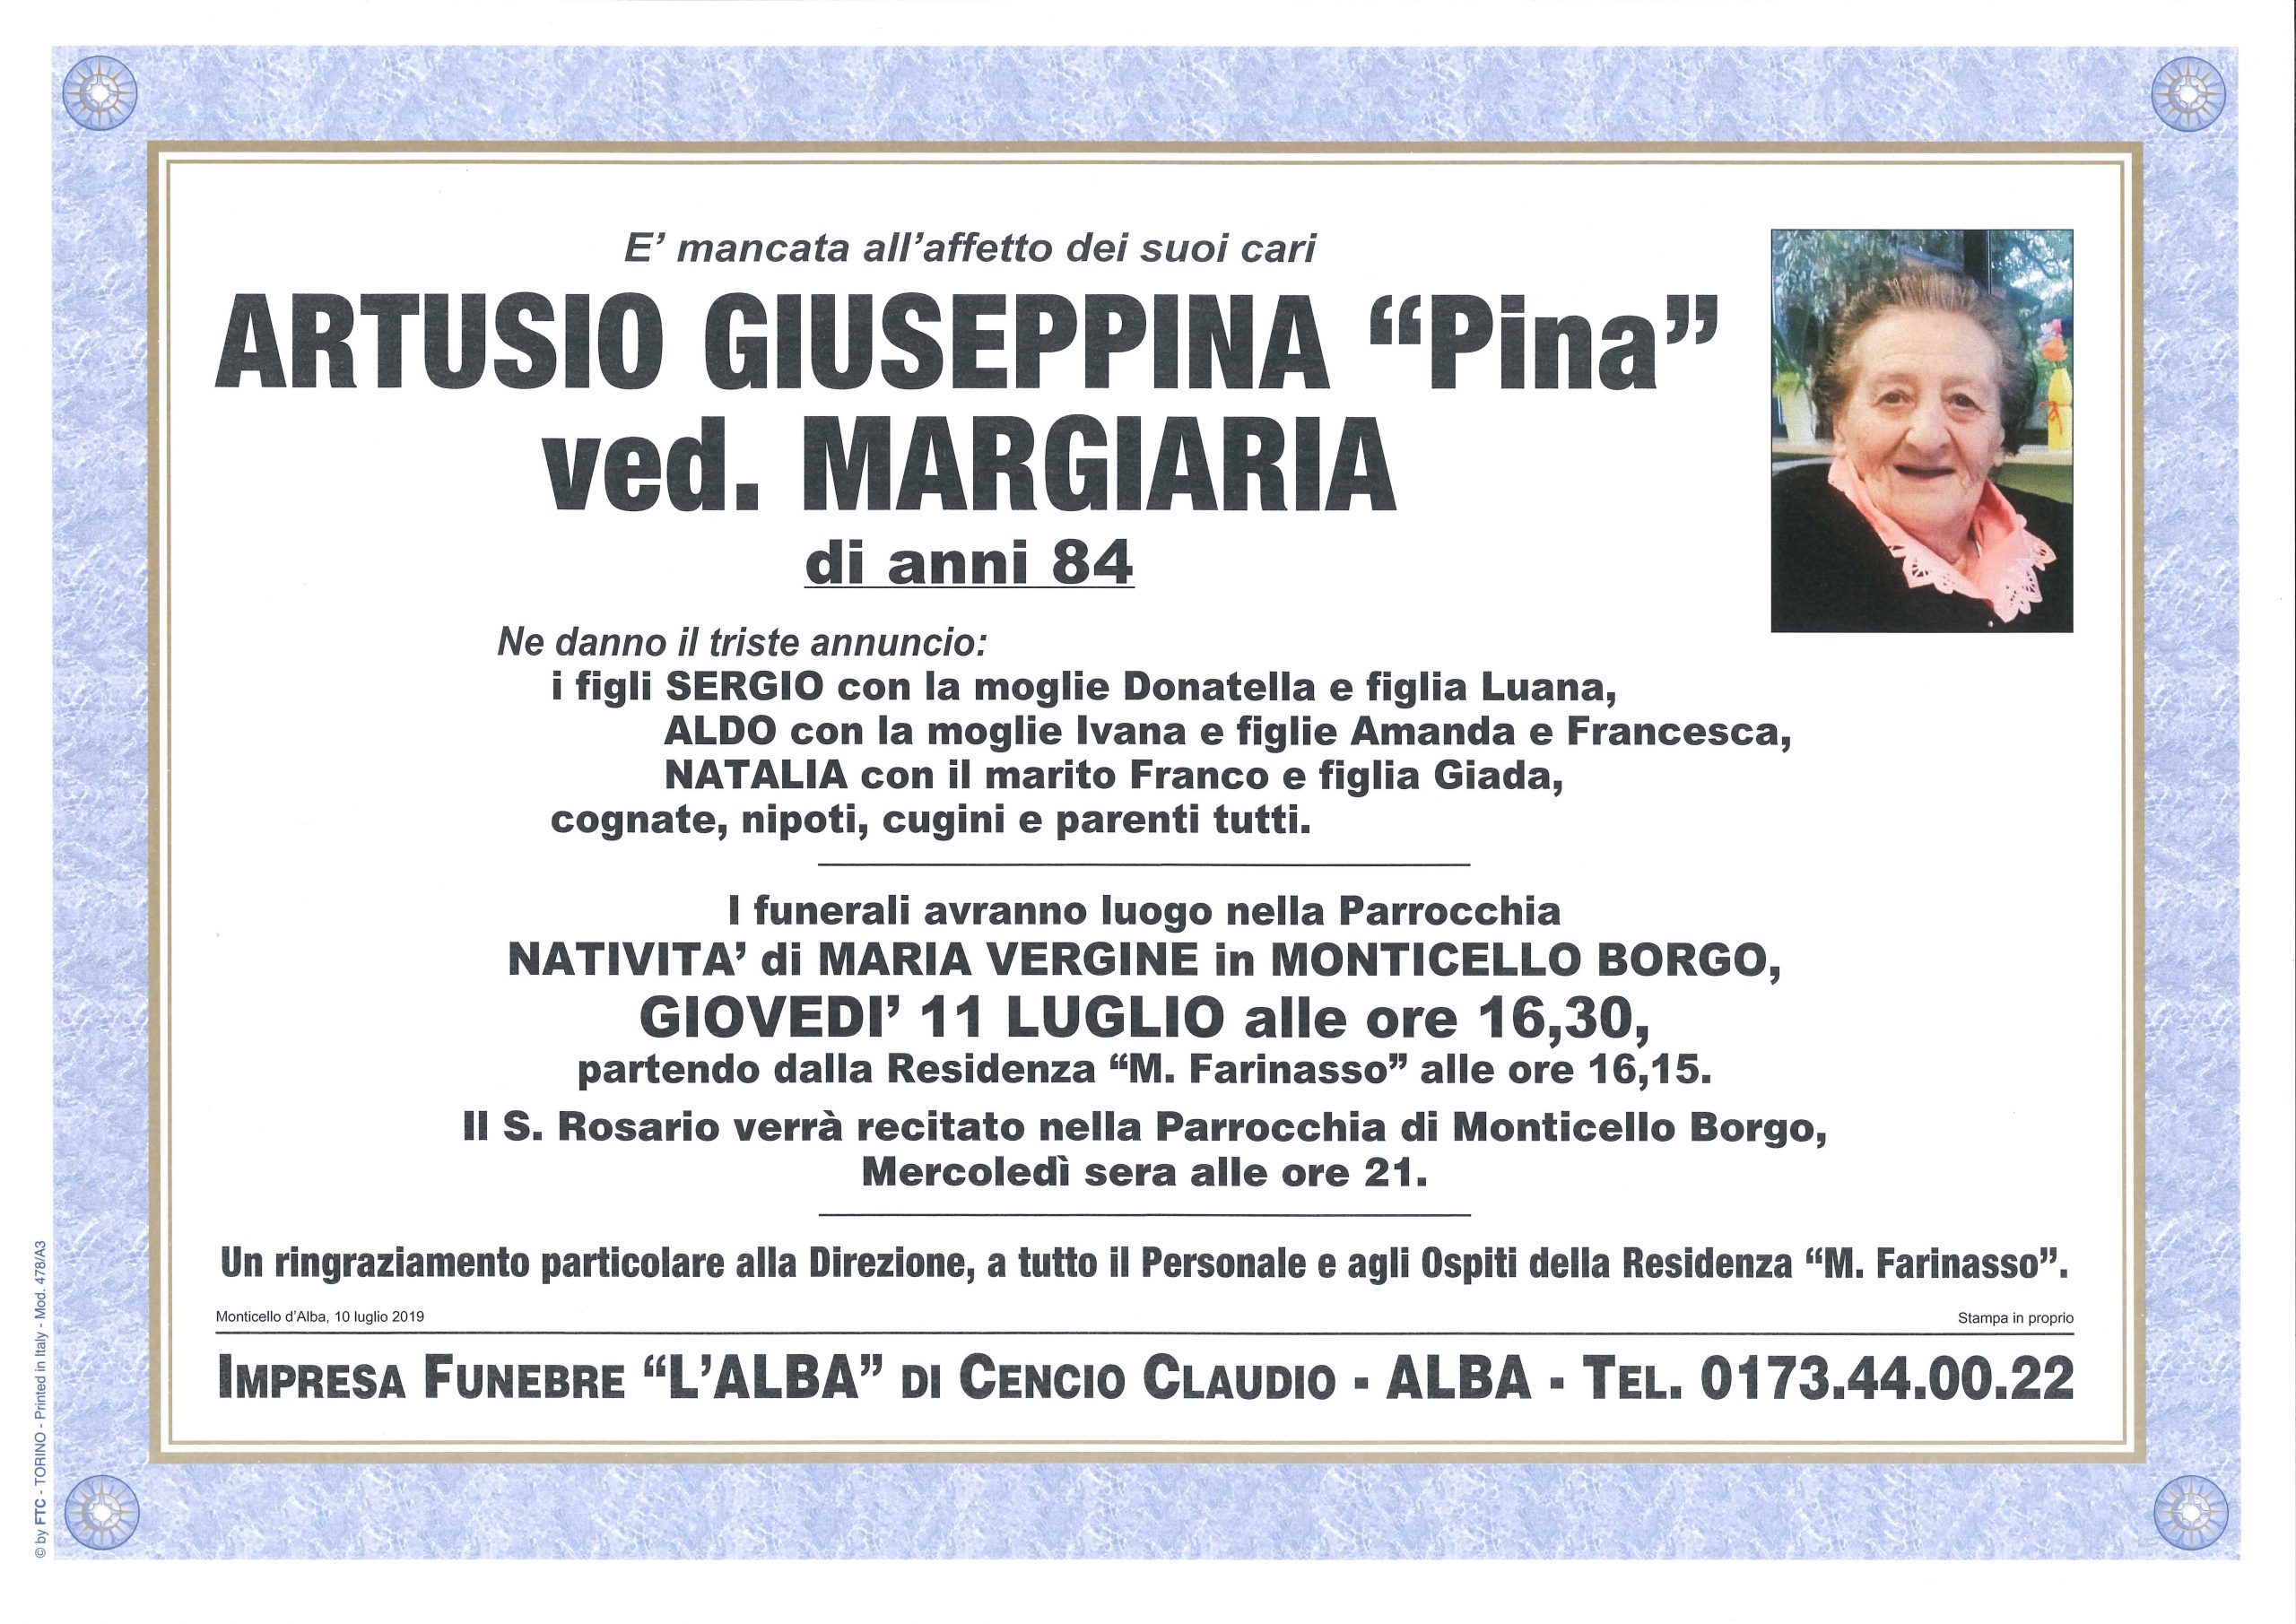 Giuseppina Artusio (Pina) ved. Margiaria